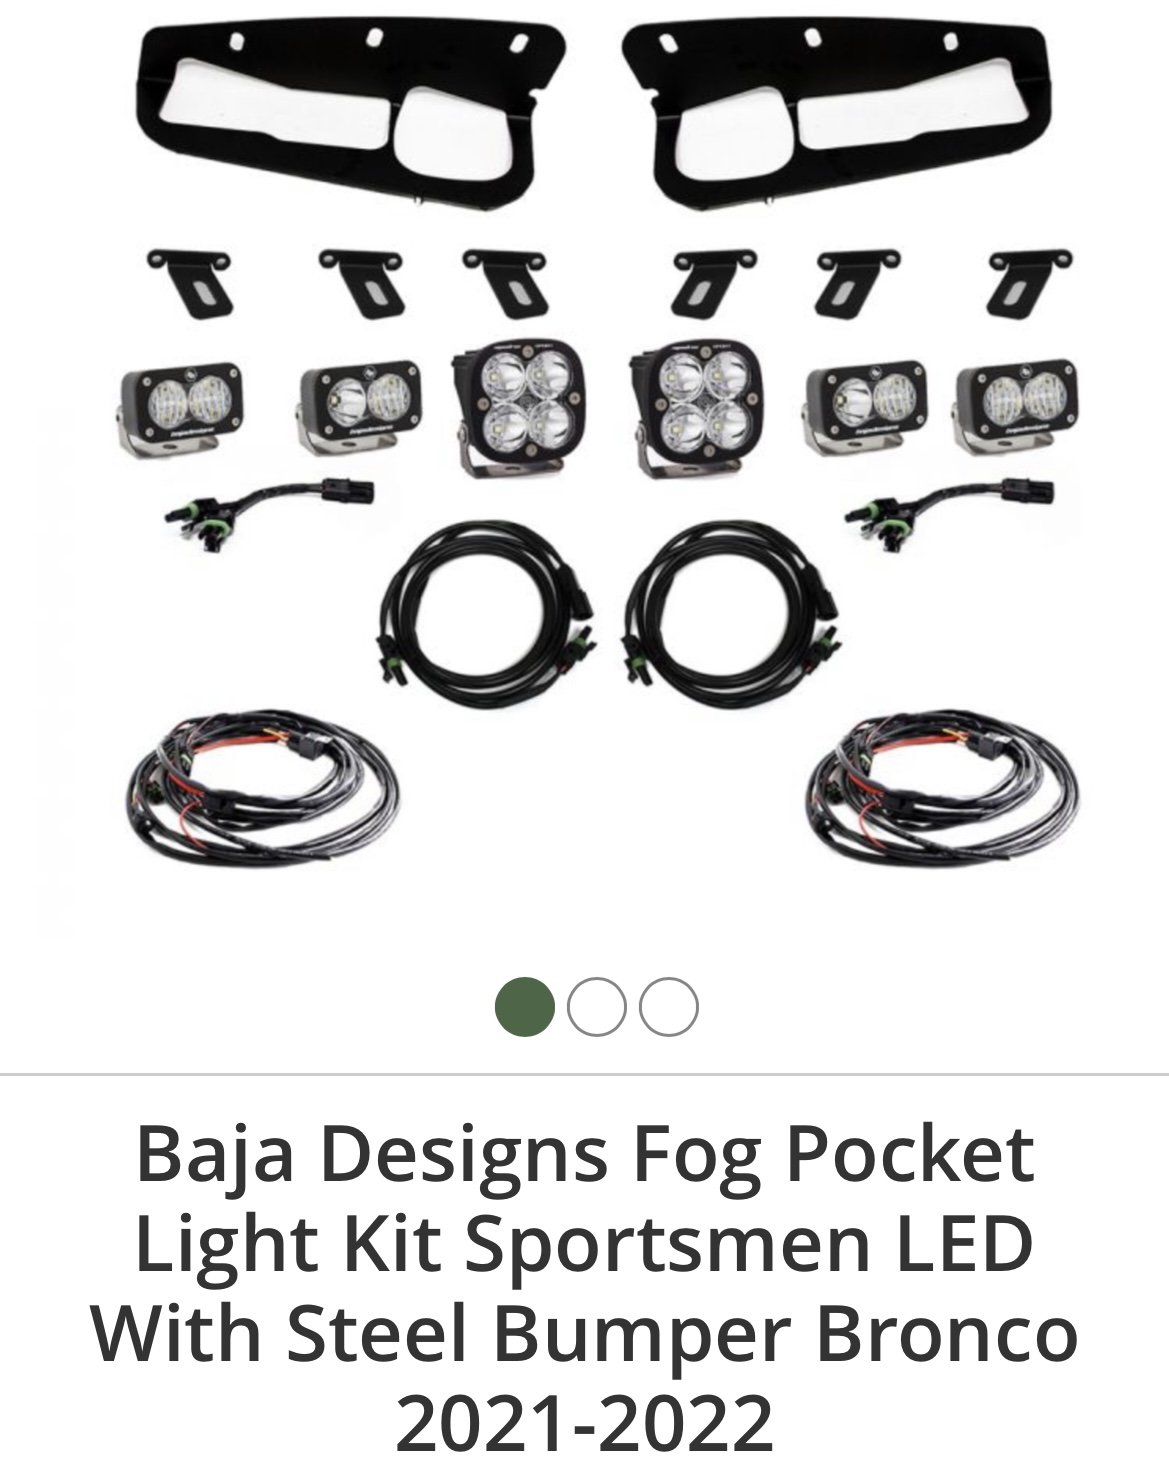 Ford Bronco FOR SALE ***** Baja Designs Fog Pocket Light Kit Sportsmen LED With Steel Bumper Bronco 2021-2022 0CEA967E-18B9-4D7B-9703-A0A12ADE6282